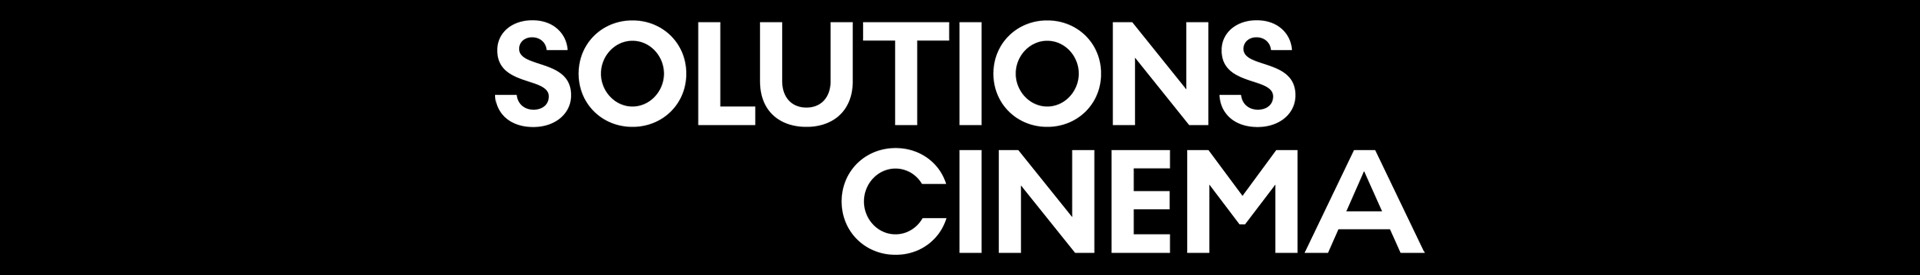 Solutions Cinema